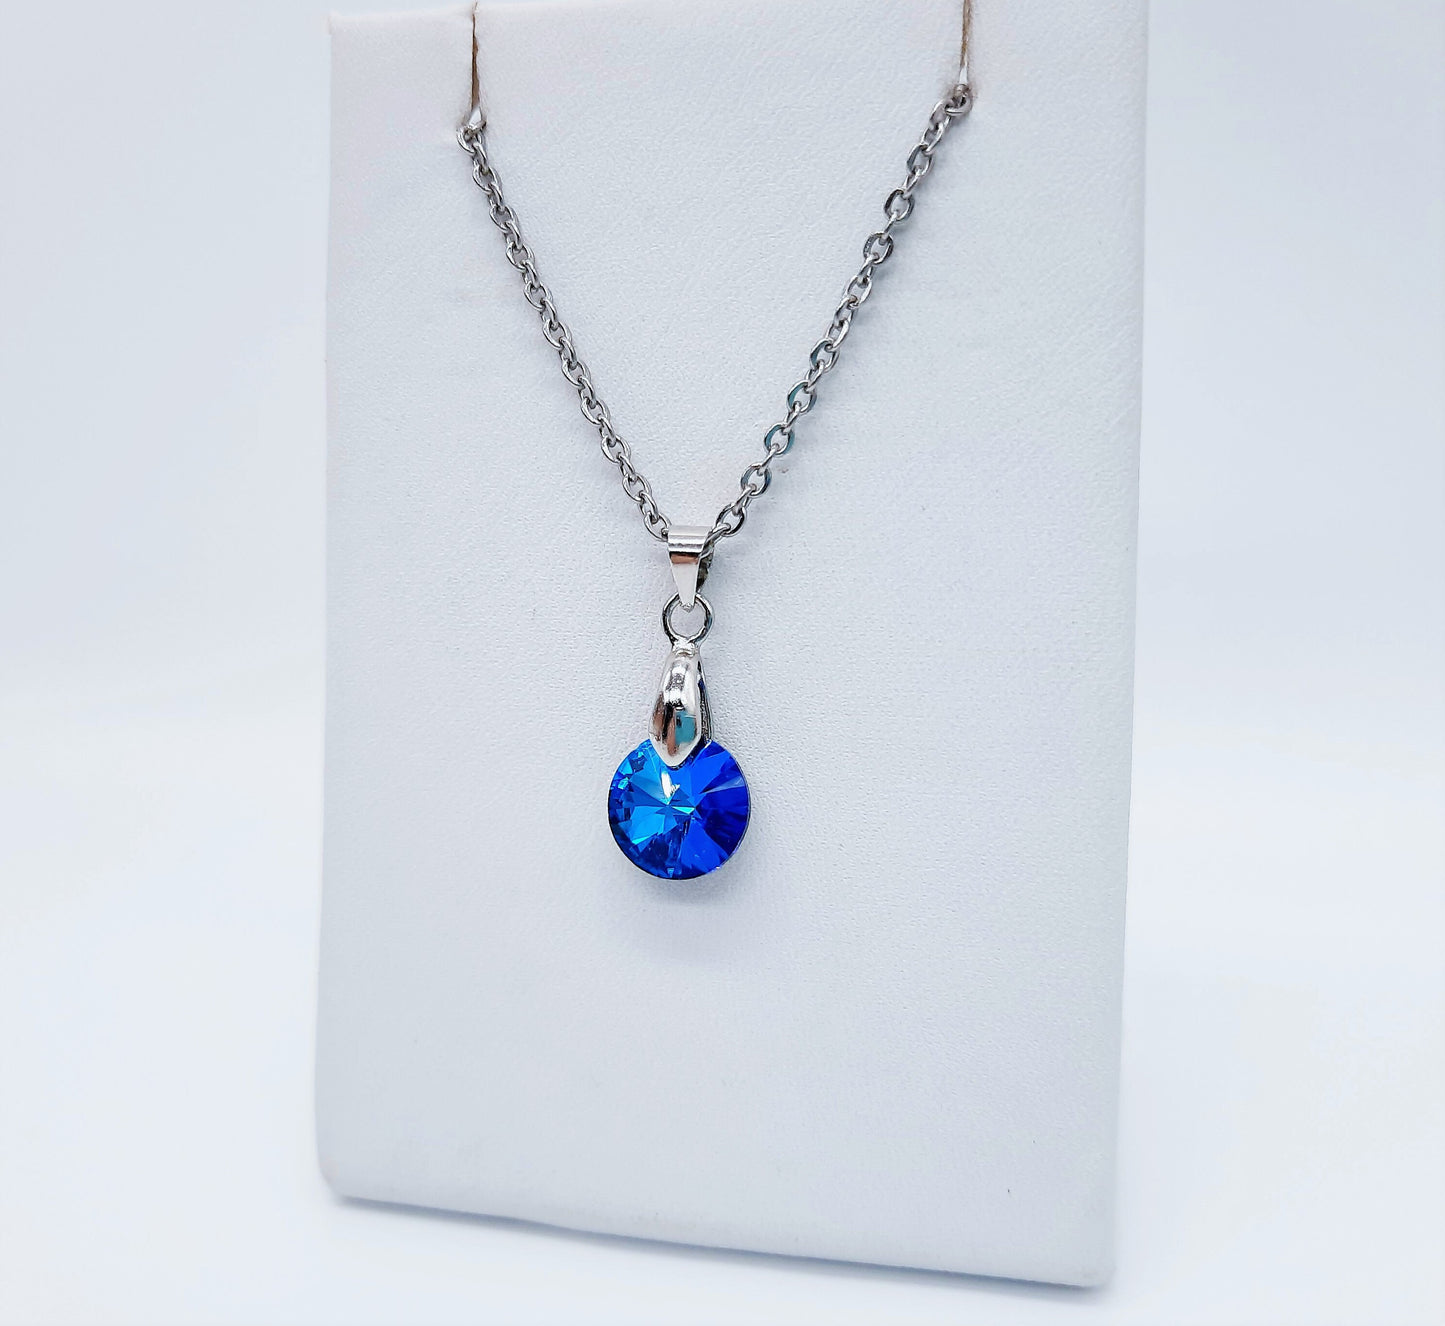 Handcrafted Multifaceted Bermuda Blue Round Glass Rhinestone Pendant Necklace - Hypoallergenic Stainless Steel Chain - Blue Zircon Look